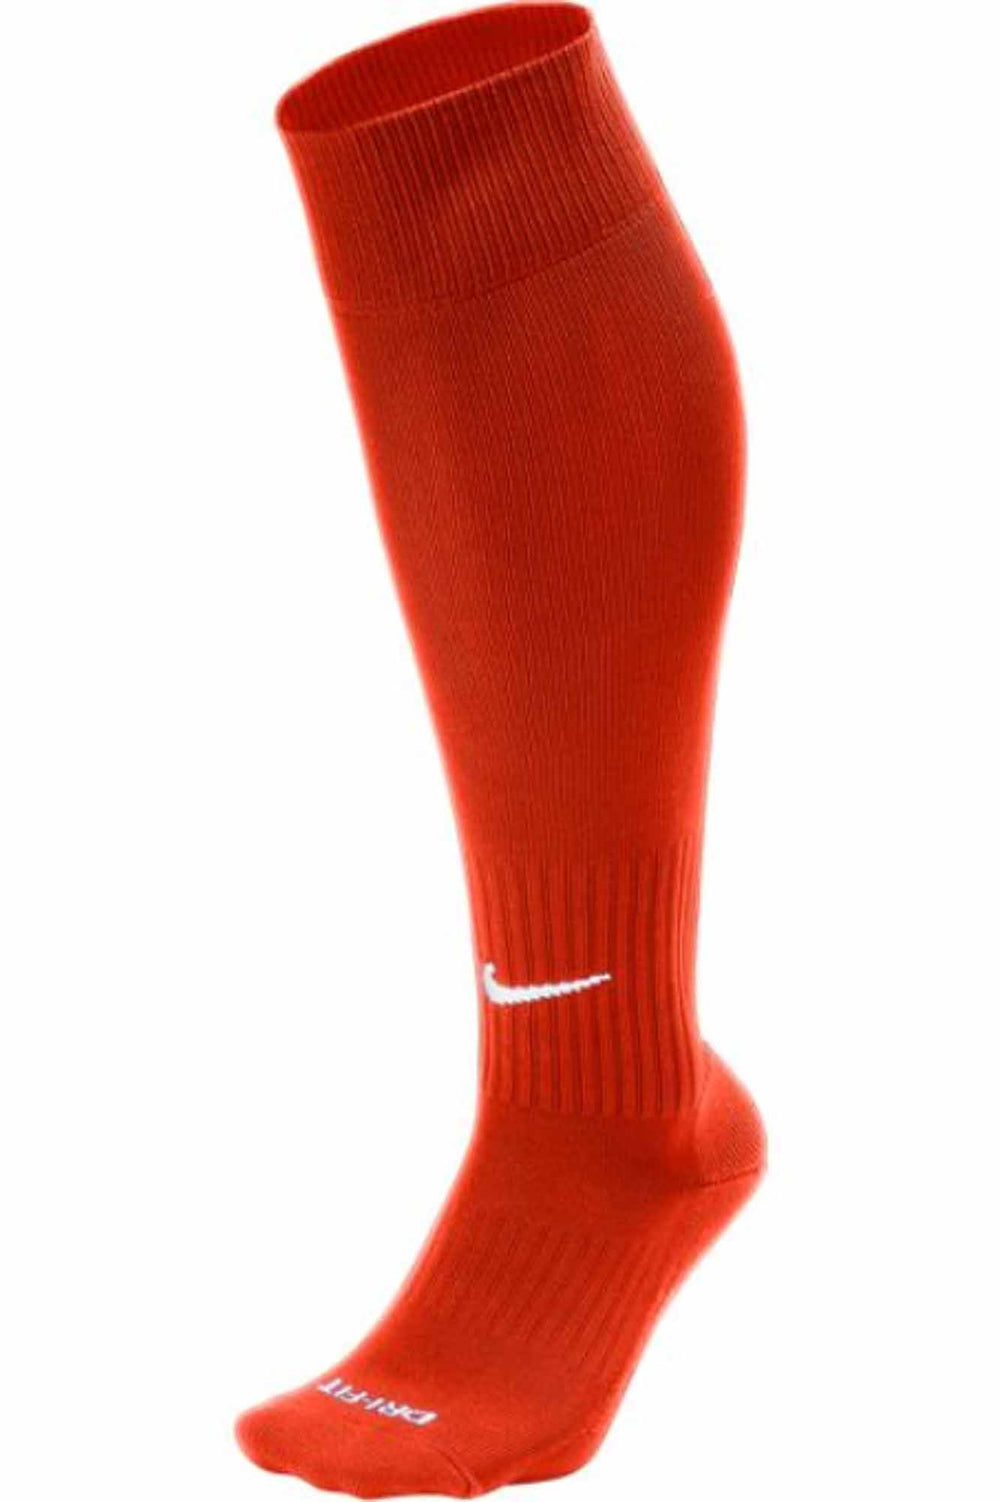 Nike ACS Classic II Sock - Orange, White and Navy  ORANGE Medium (5-8.5) - Third Coast Soccer